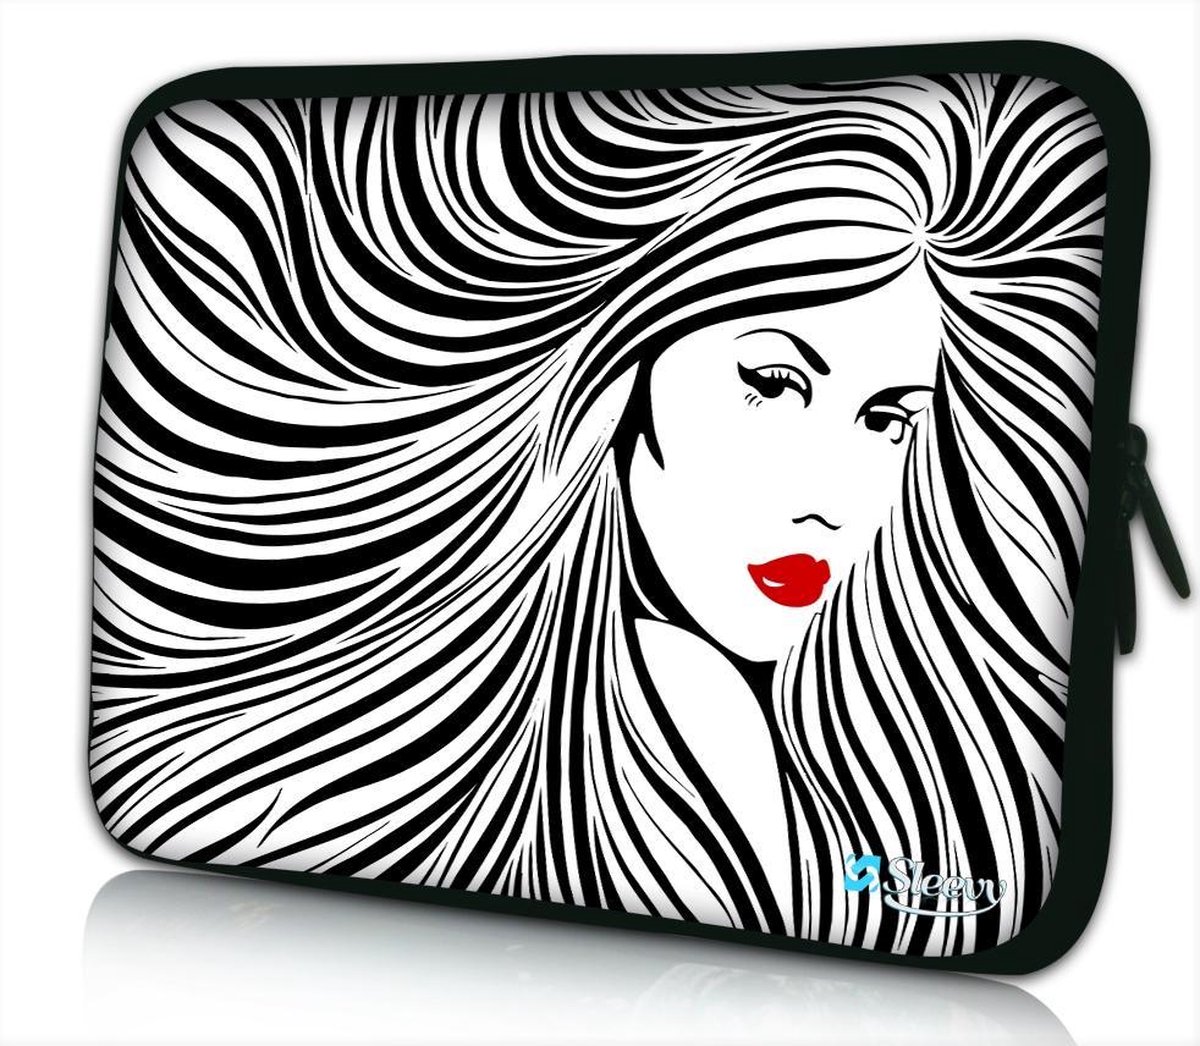 Sleevy 14 laptophoes artistieke vrouw in zwart wit - laptop sleeve - Sleevy collectie 300+ designs